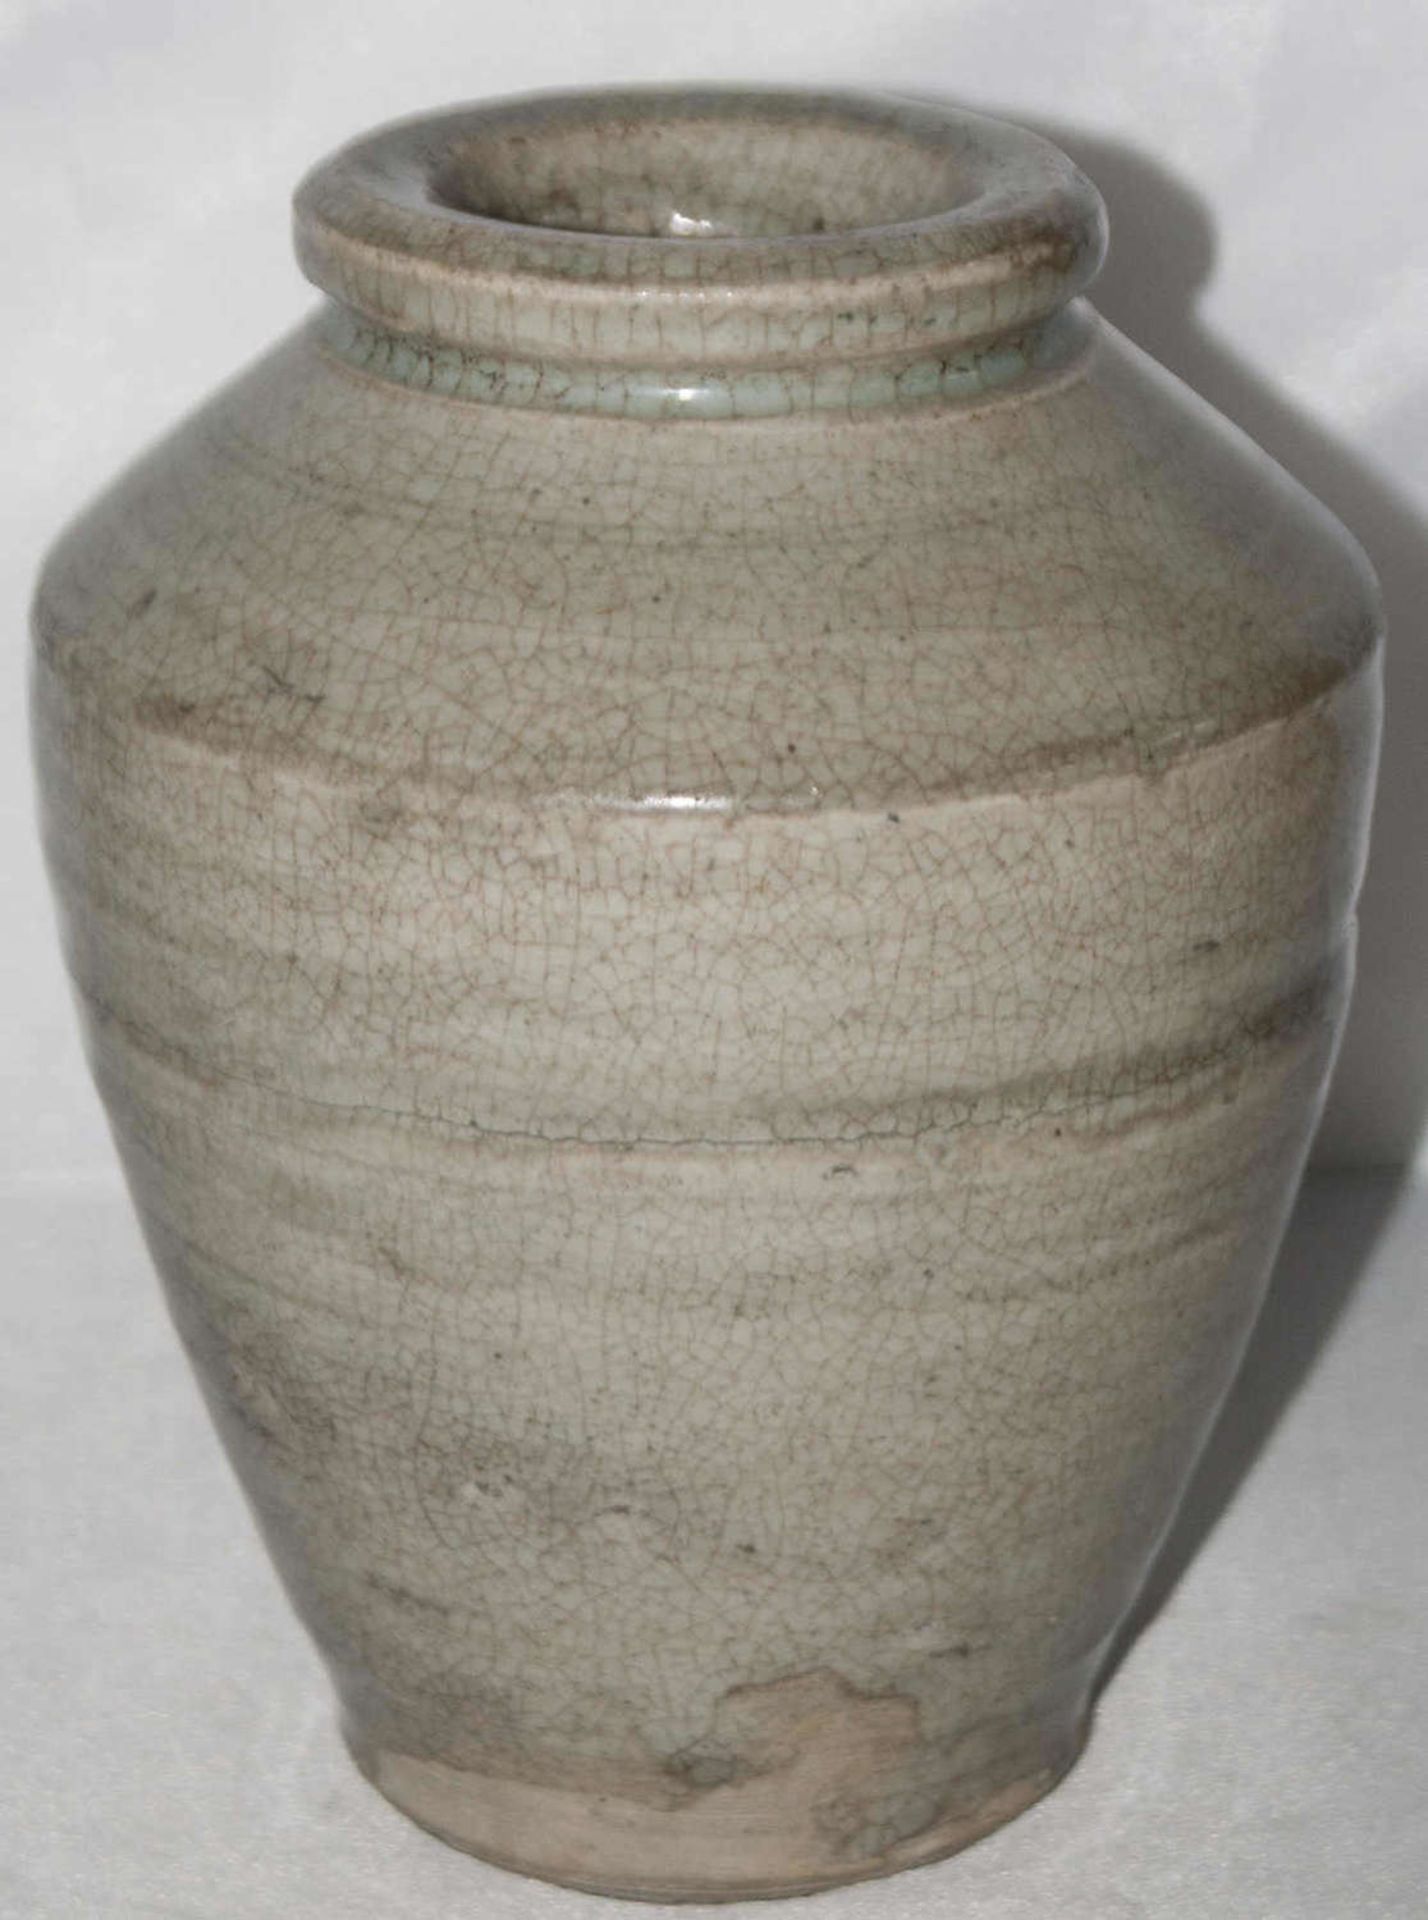 Southern Song Dynastie, 1127-1279. China Stone Vase in sehr guter Erhaltung, aus alter Sammlung. - Image 2 of 4